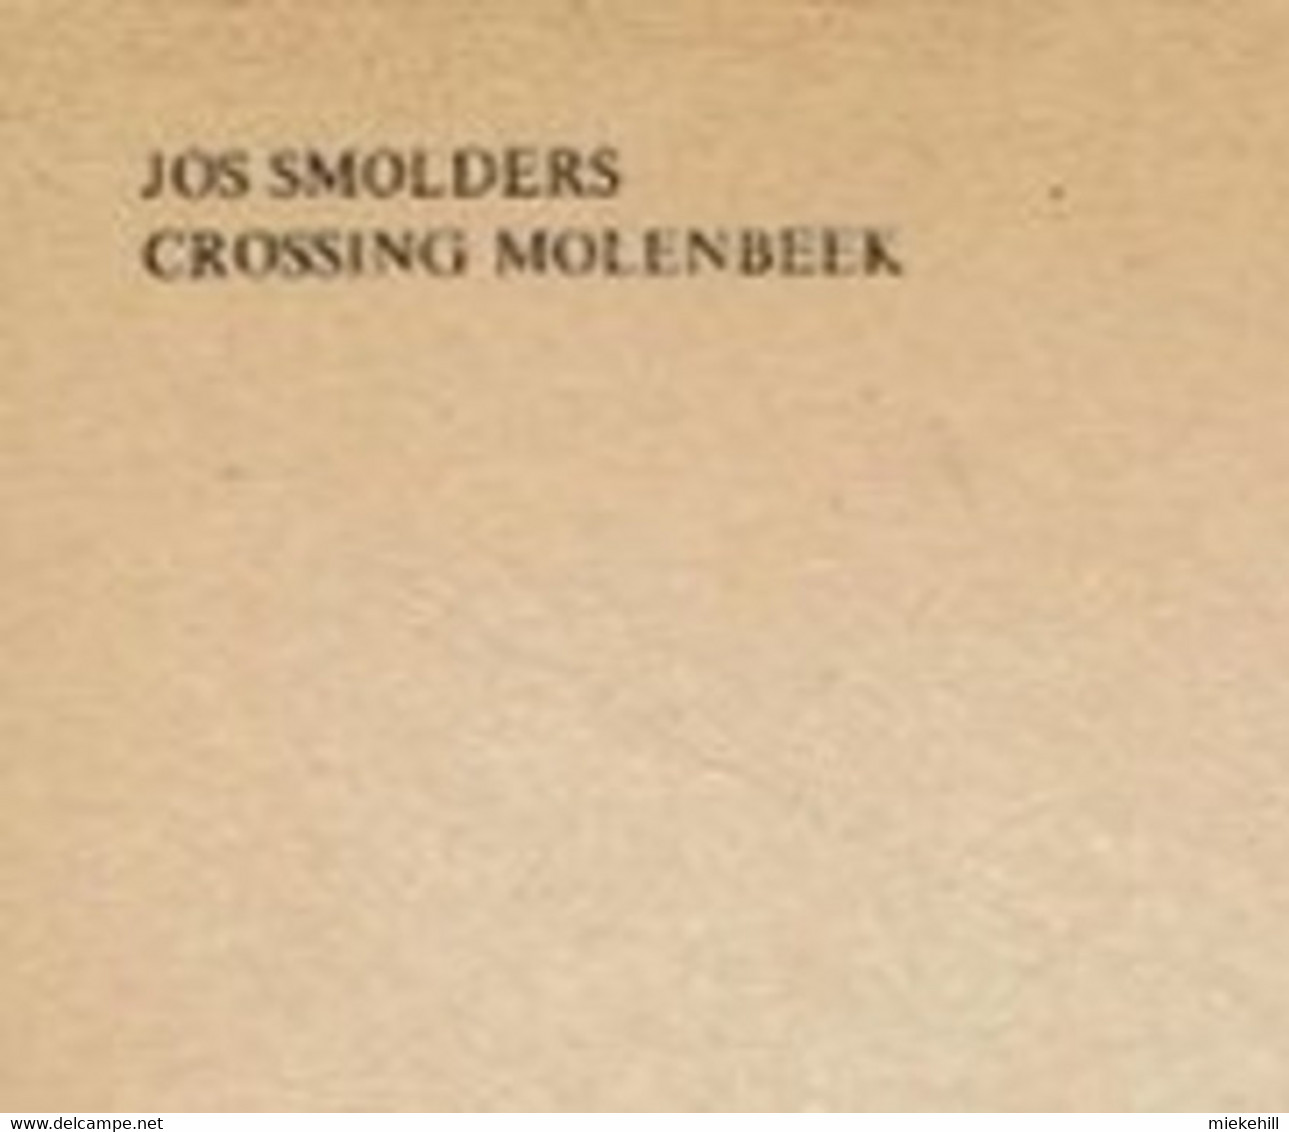 MOLENBEEK-JOS SMOLDERS-JOUEUR DE FOOTBALL CROSSING MOLENBEEK - Molenbeek-St-Jean - St-Jans-Molenbeek